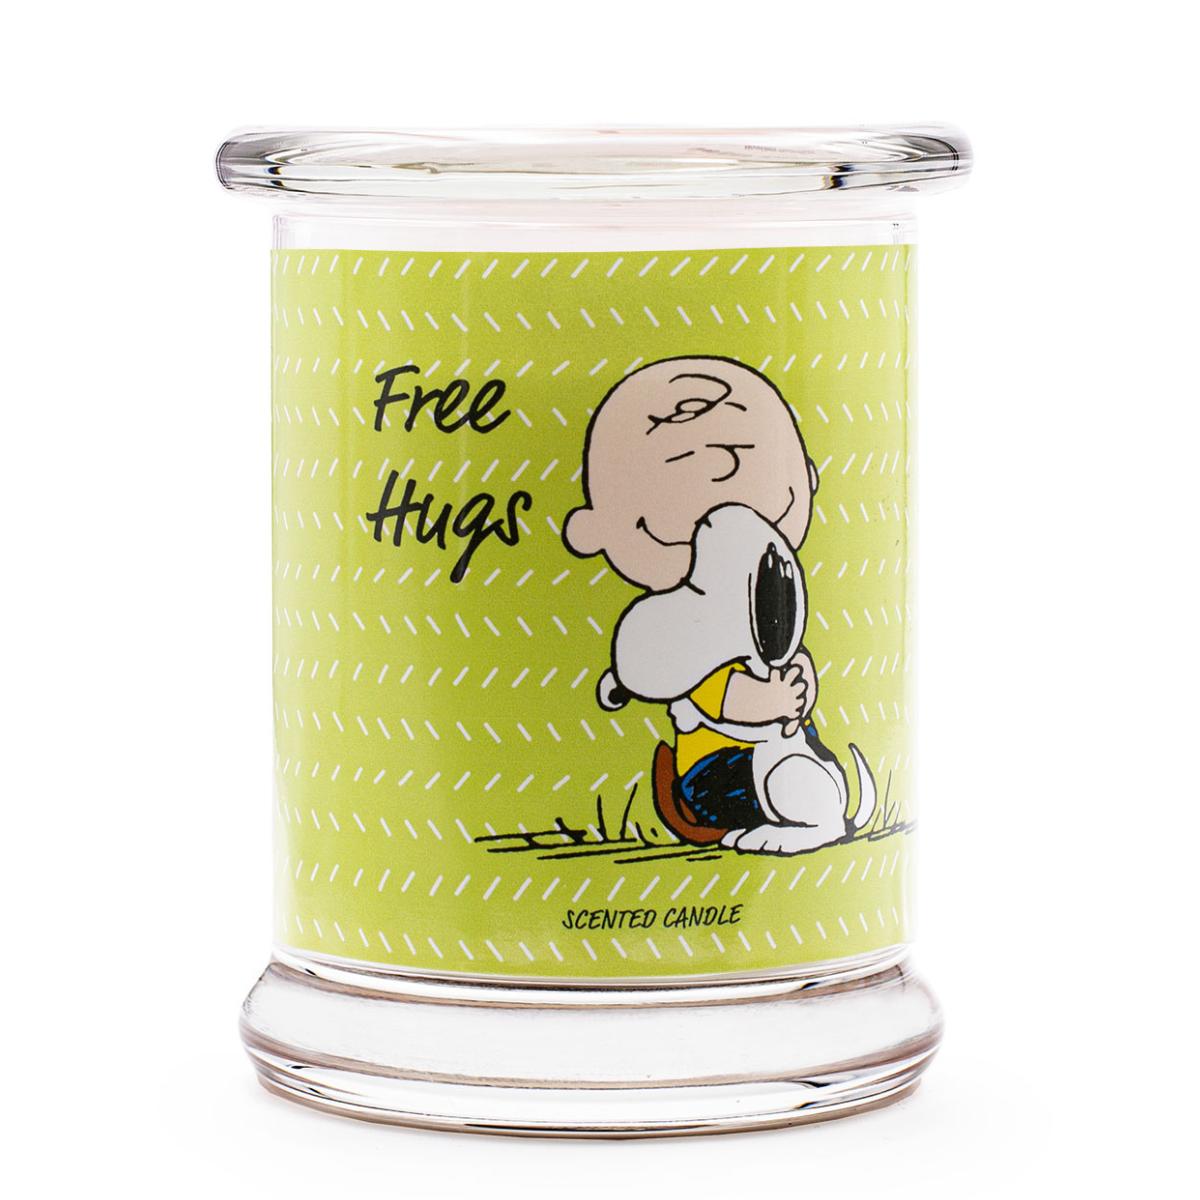 Free Hugs - Duftkerze 250g von Peanuts